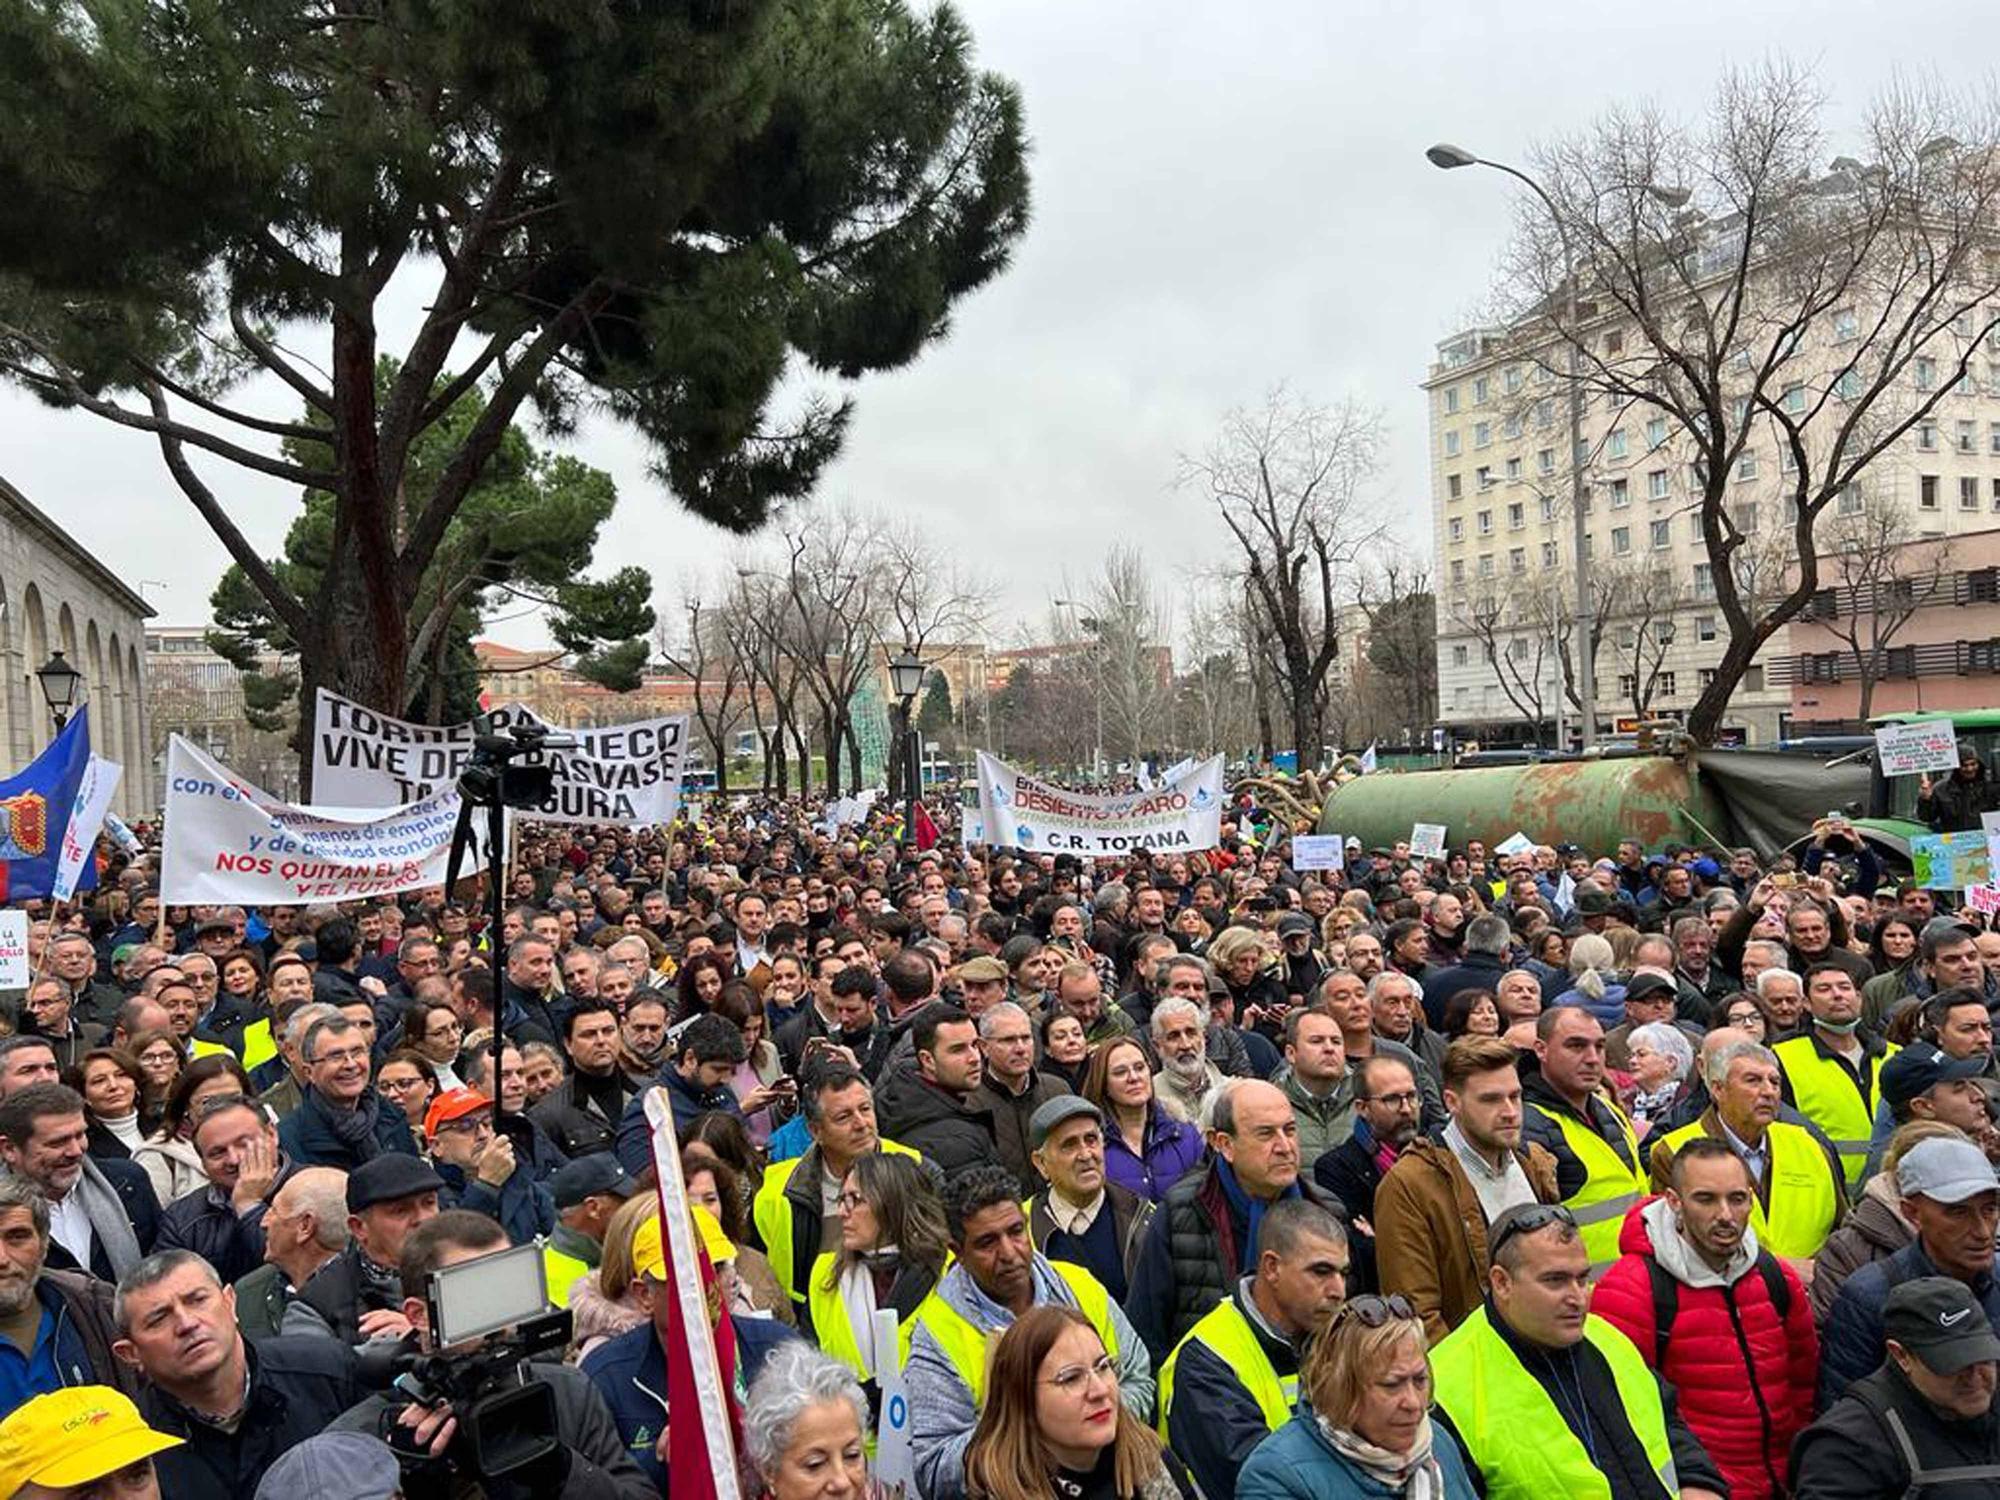 Manifestación en Madrid  exigir la retirada inmediata del recorte del Tajo-Segura